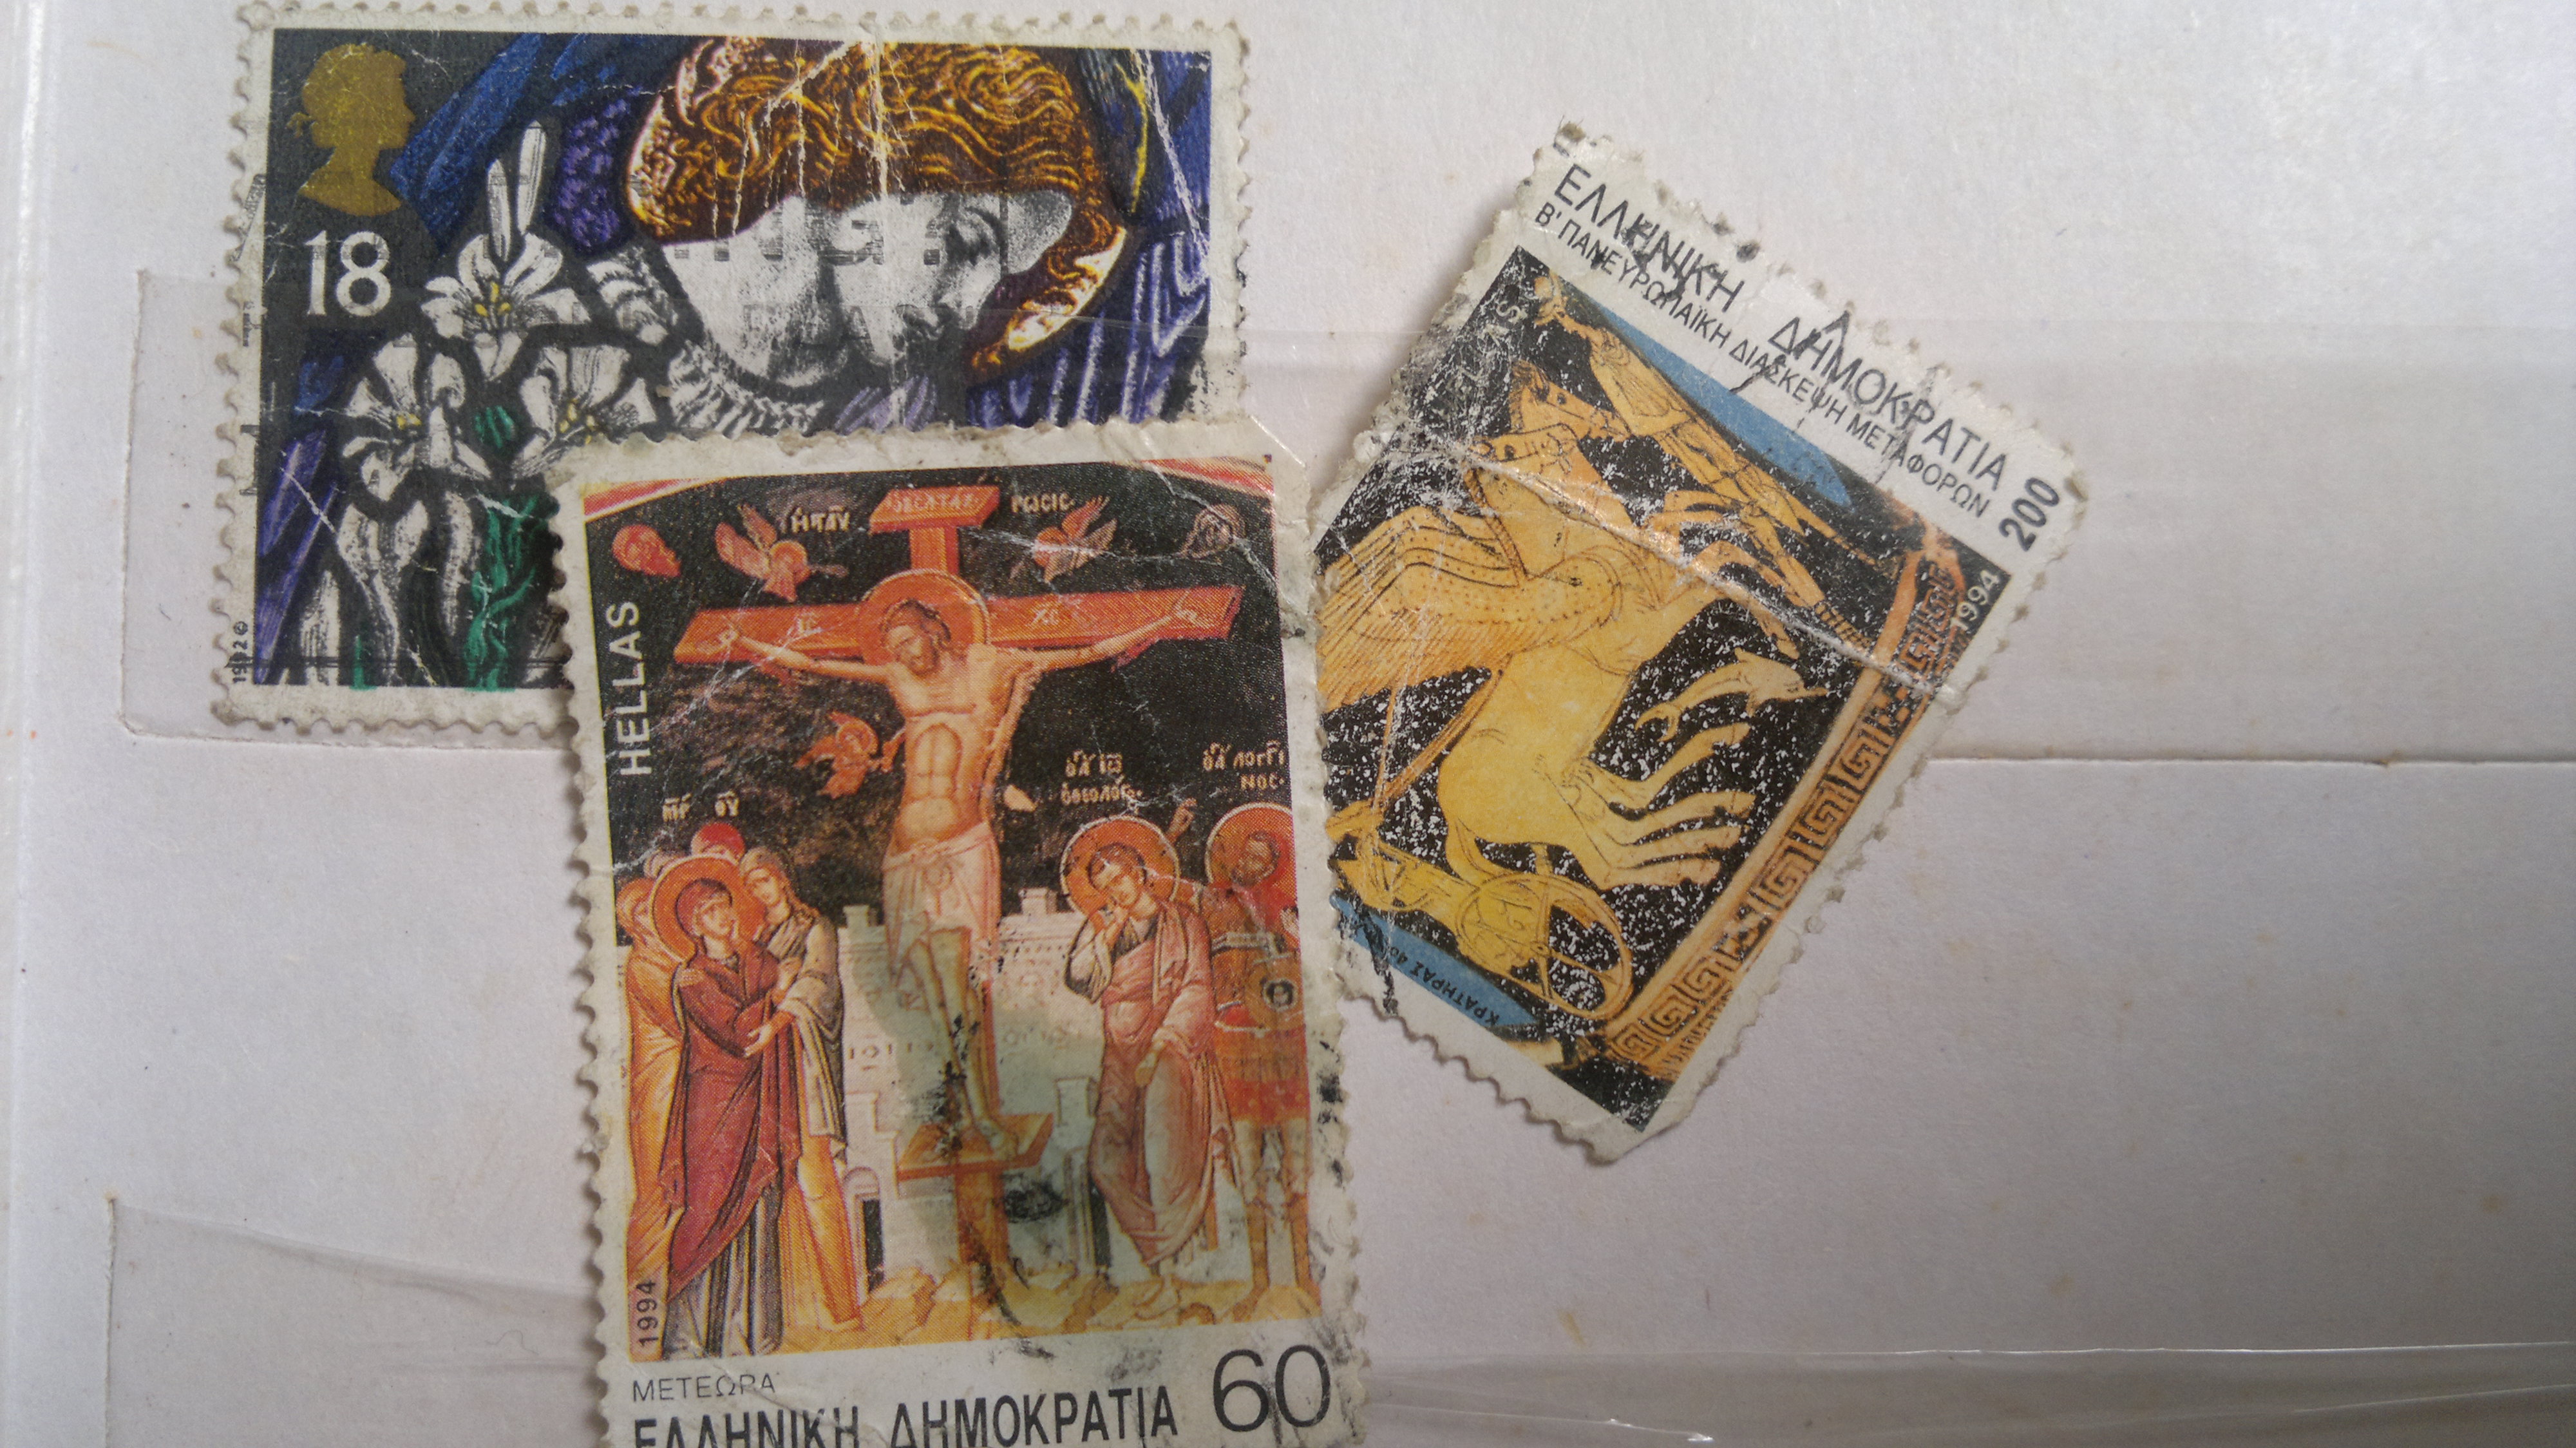 Greek Republic stamps